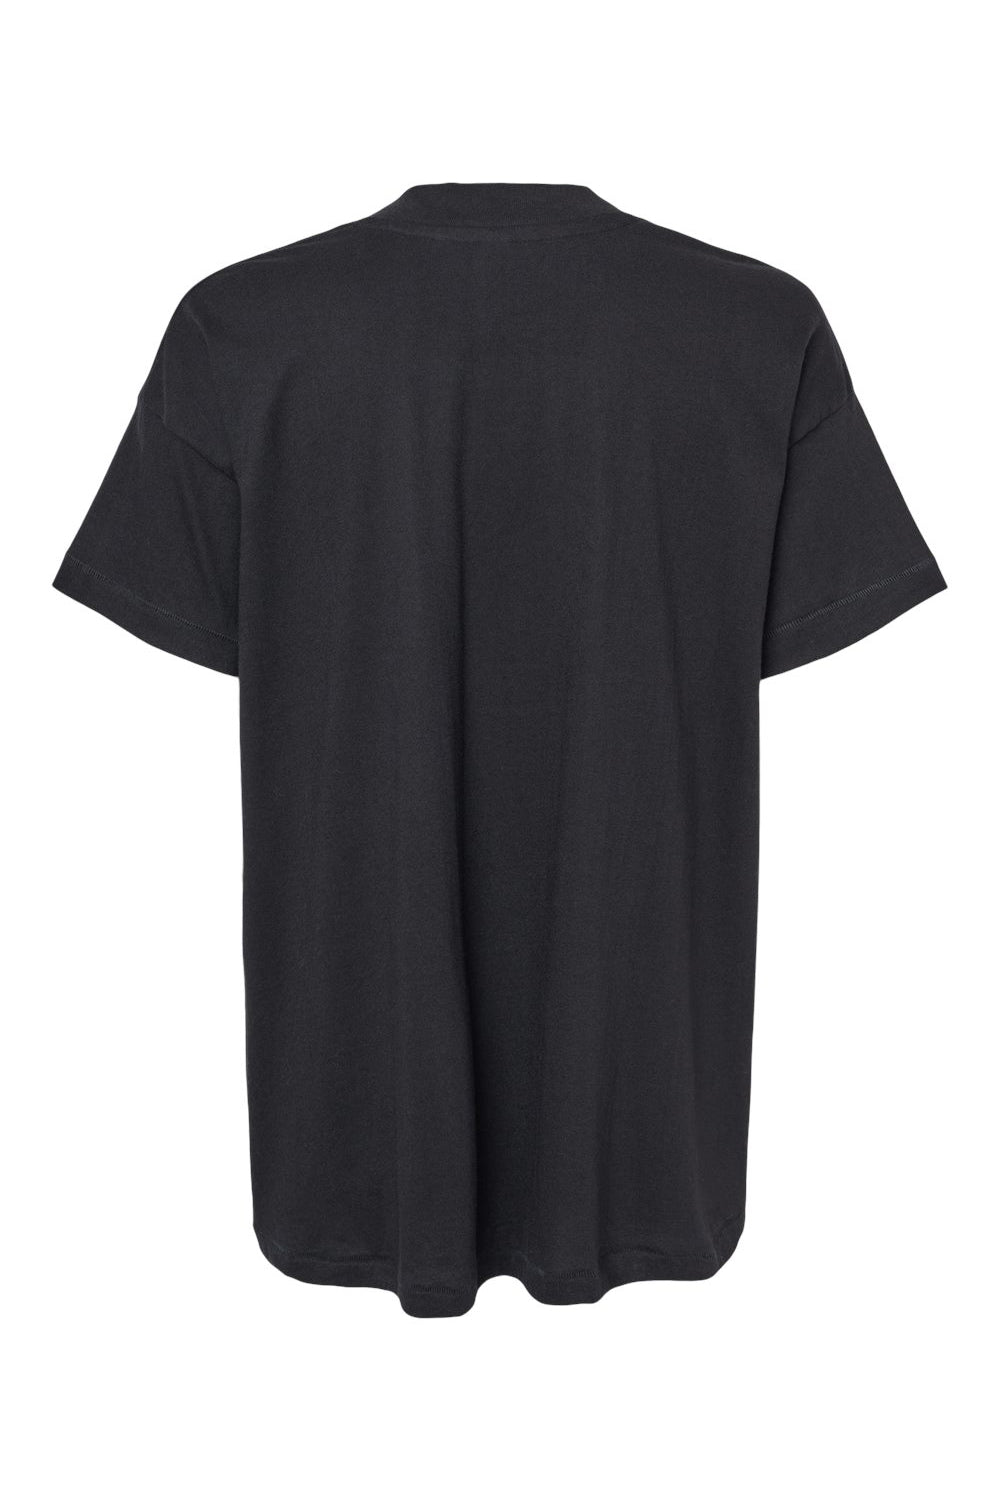 LAT 3519 Womens Hi-Lo Short Sleeve Crewneck T-Shirt Black Flat Back